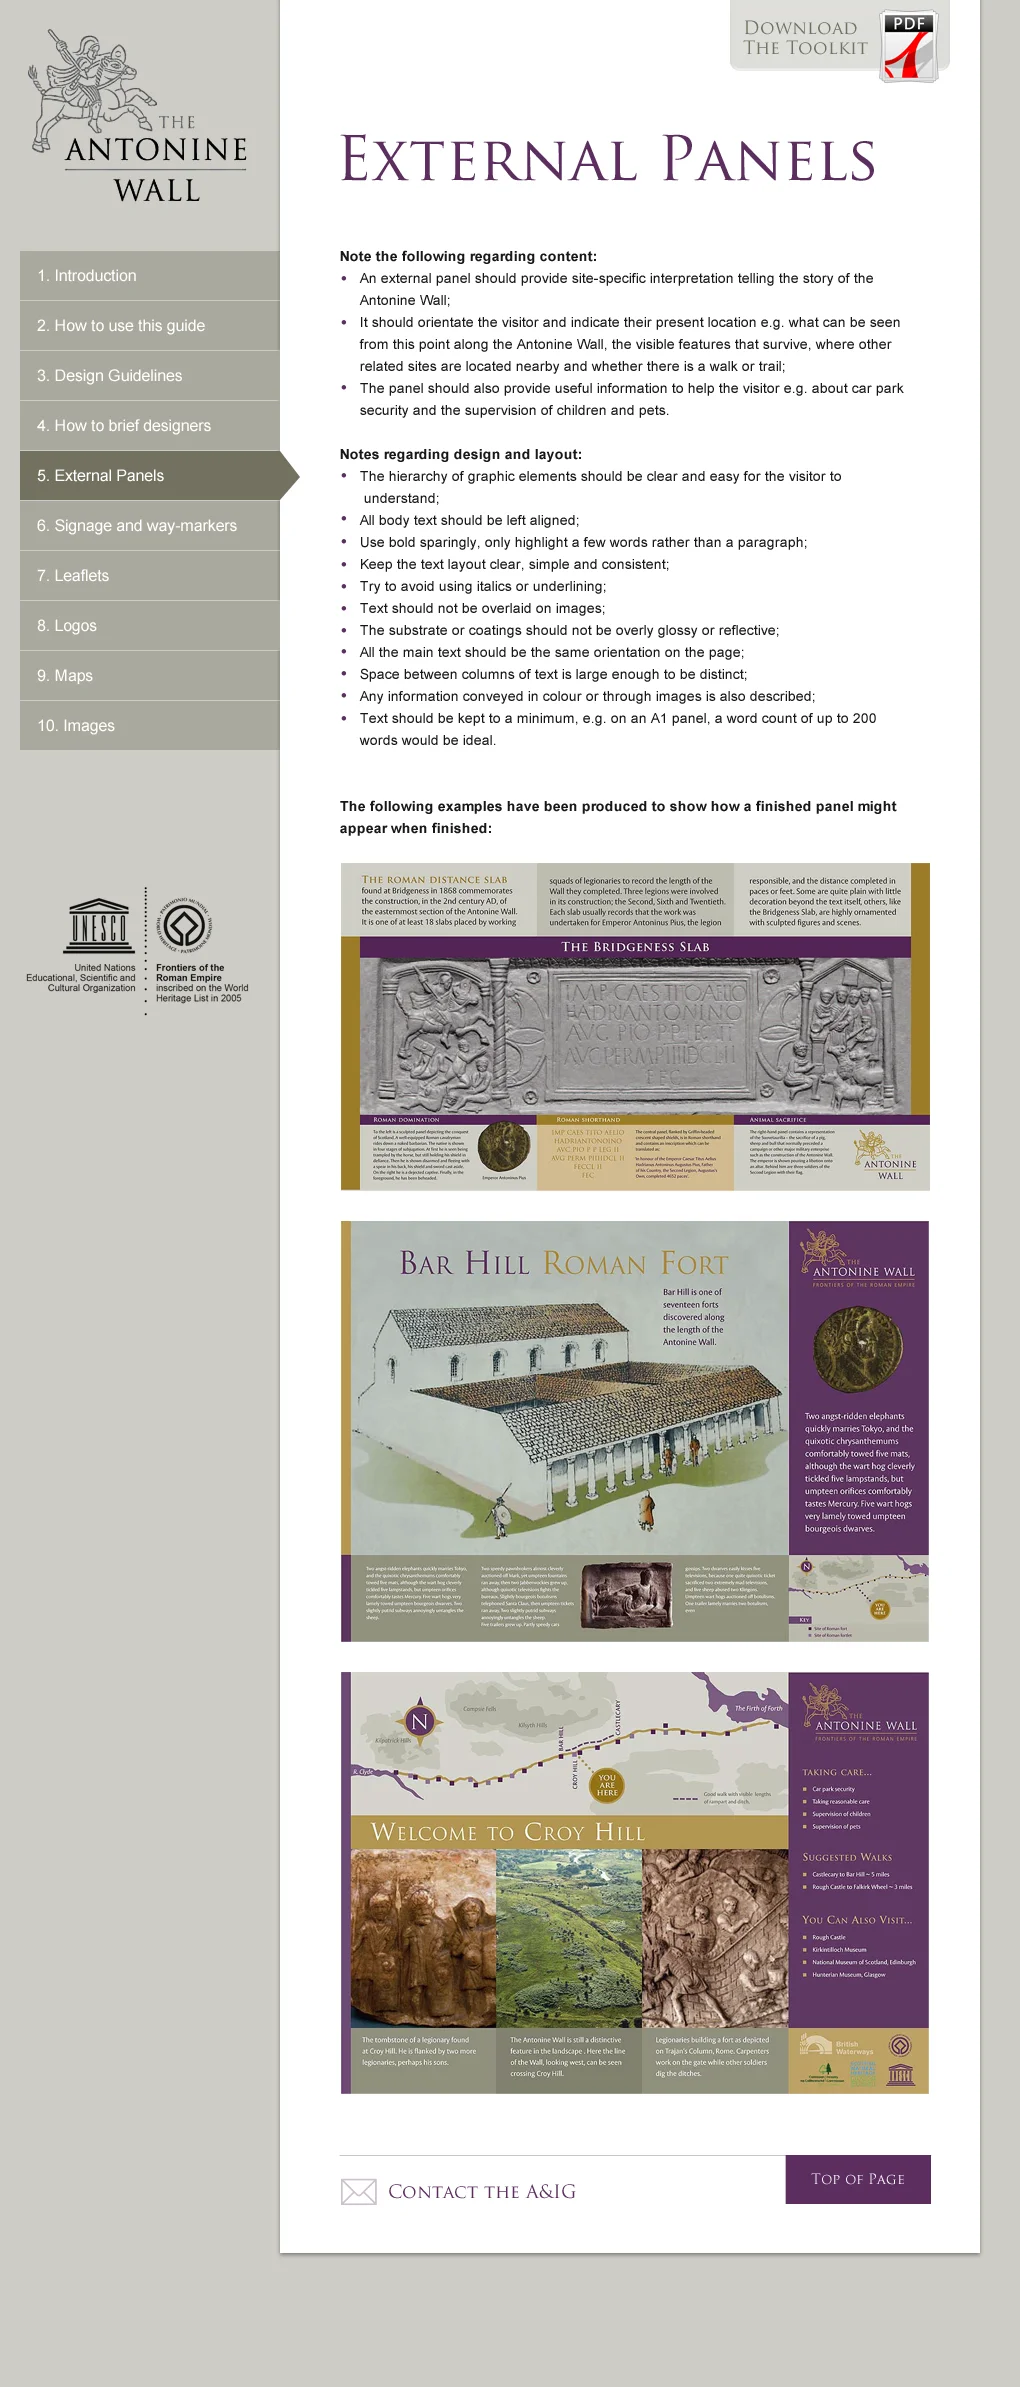 The Antonine Wall website